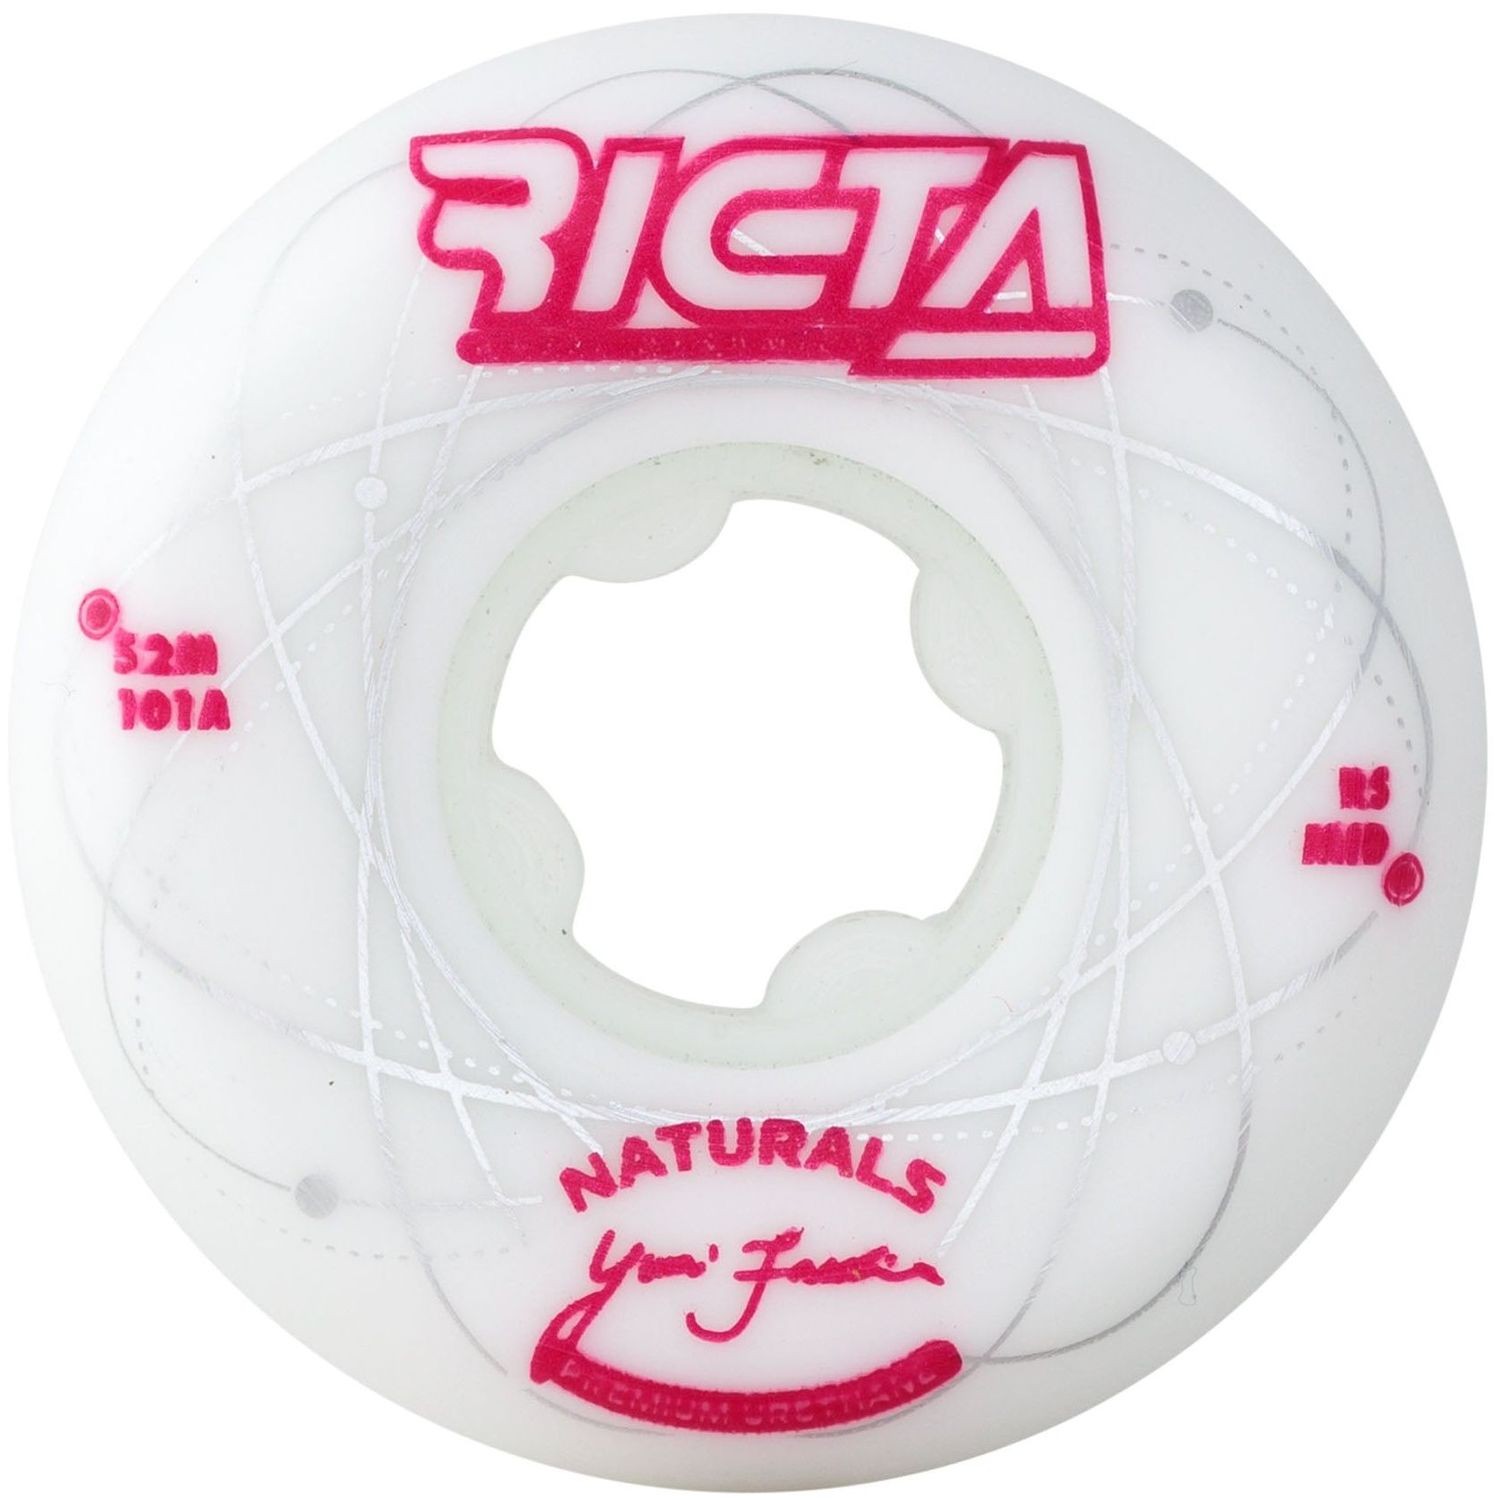 Ricta 52mm Facchini Orb 101a Skate Wheel